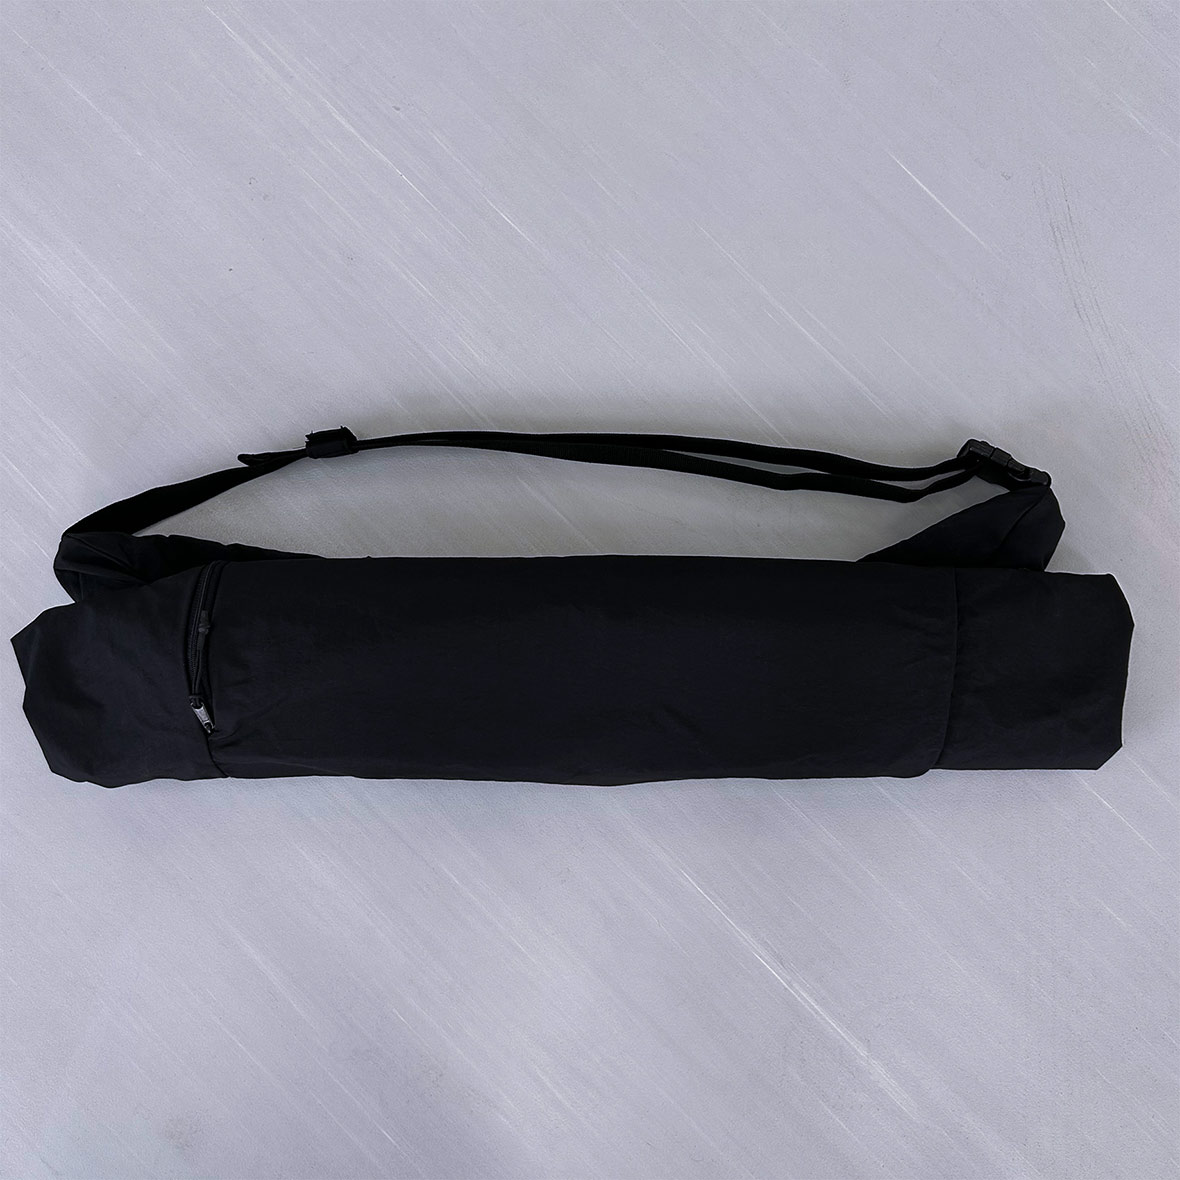 Rollin' Nylon Shoulder Bag ショルダーバック (品番CP039)